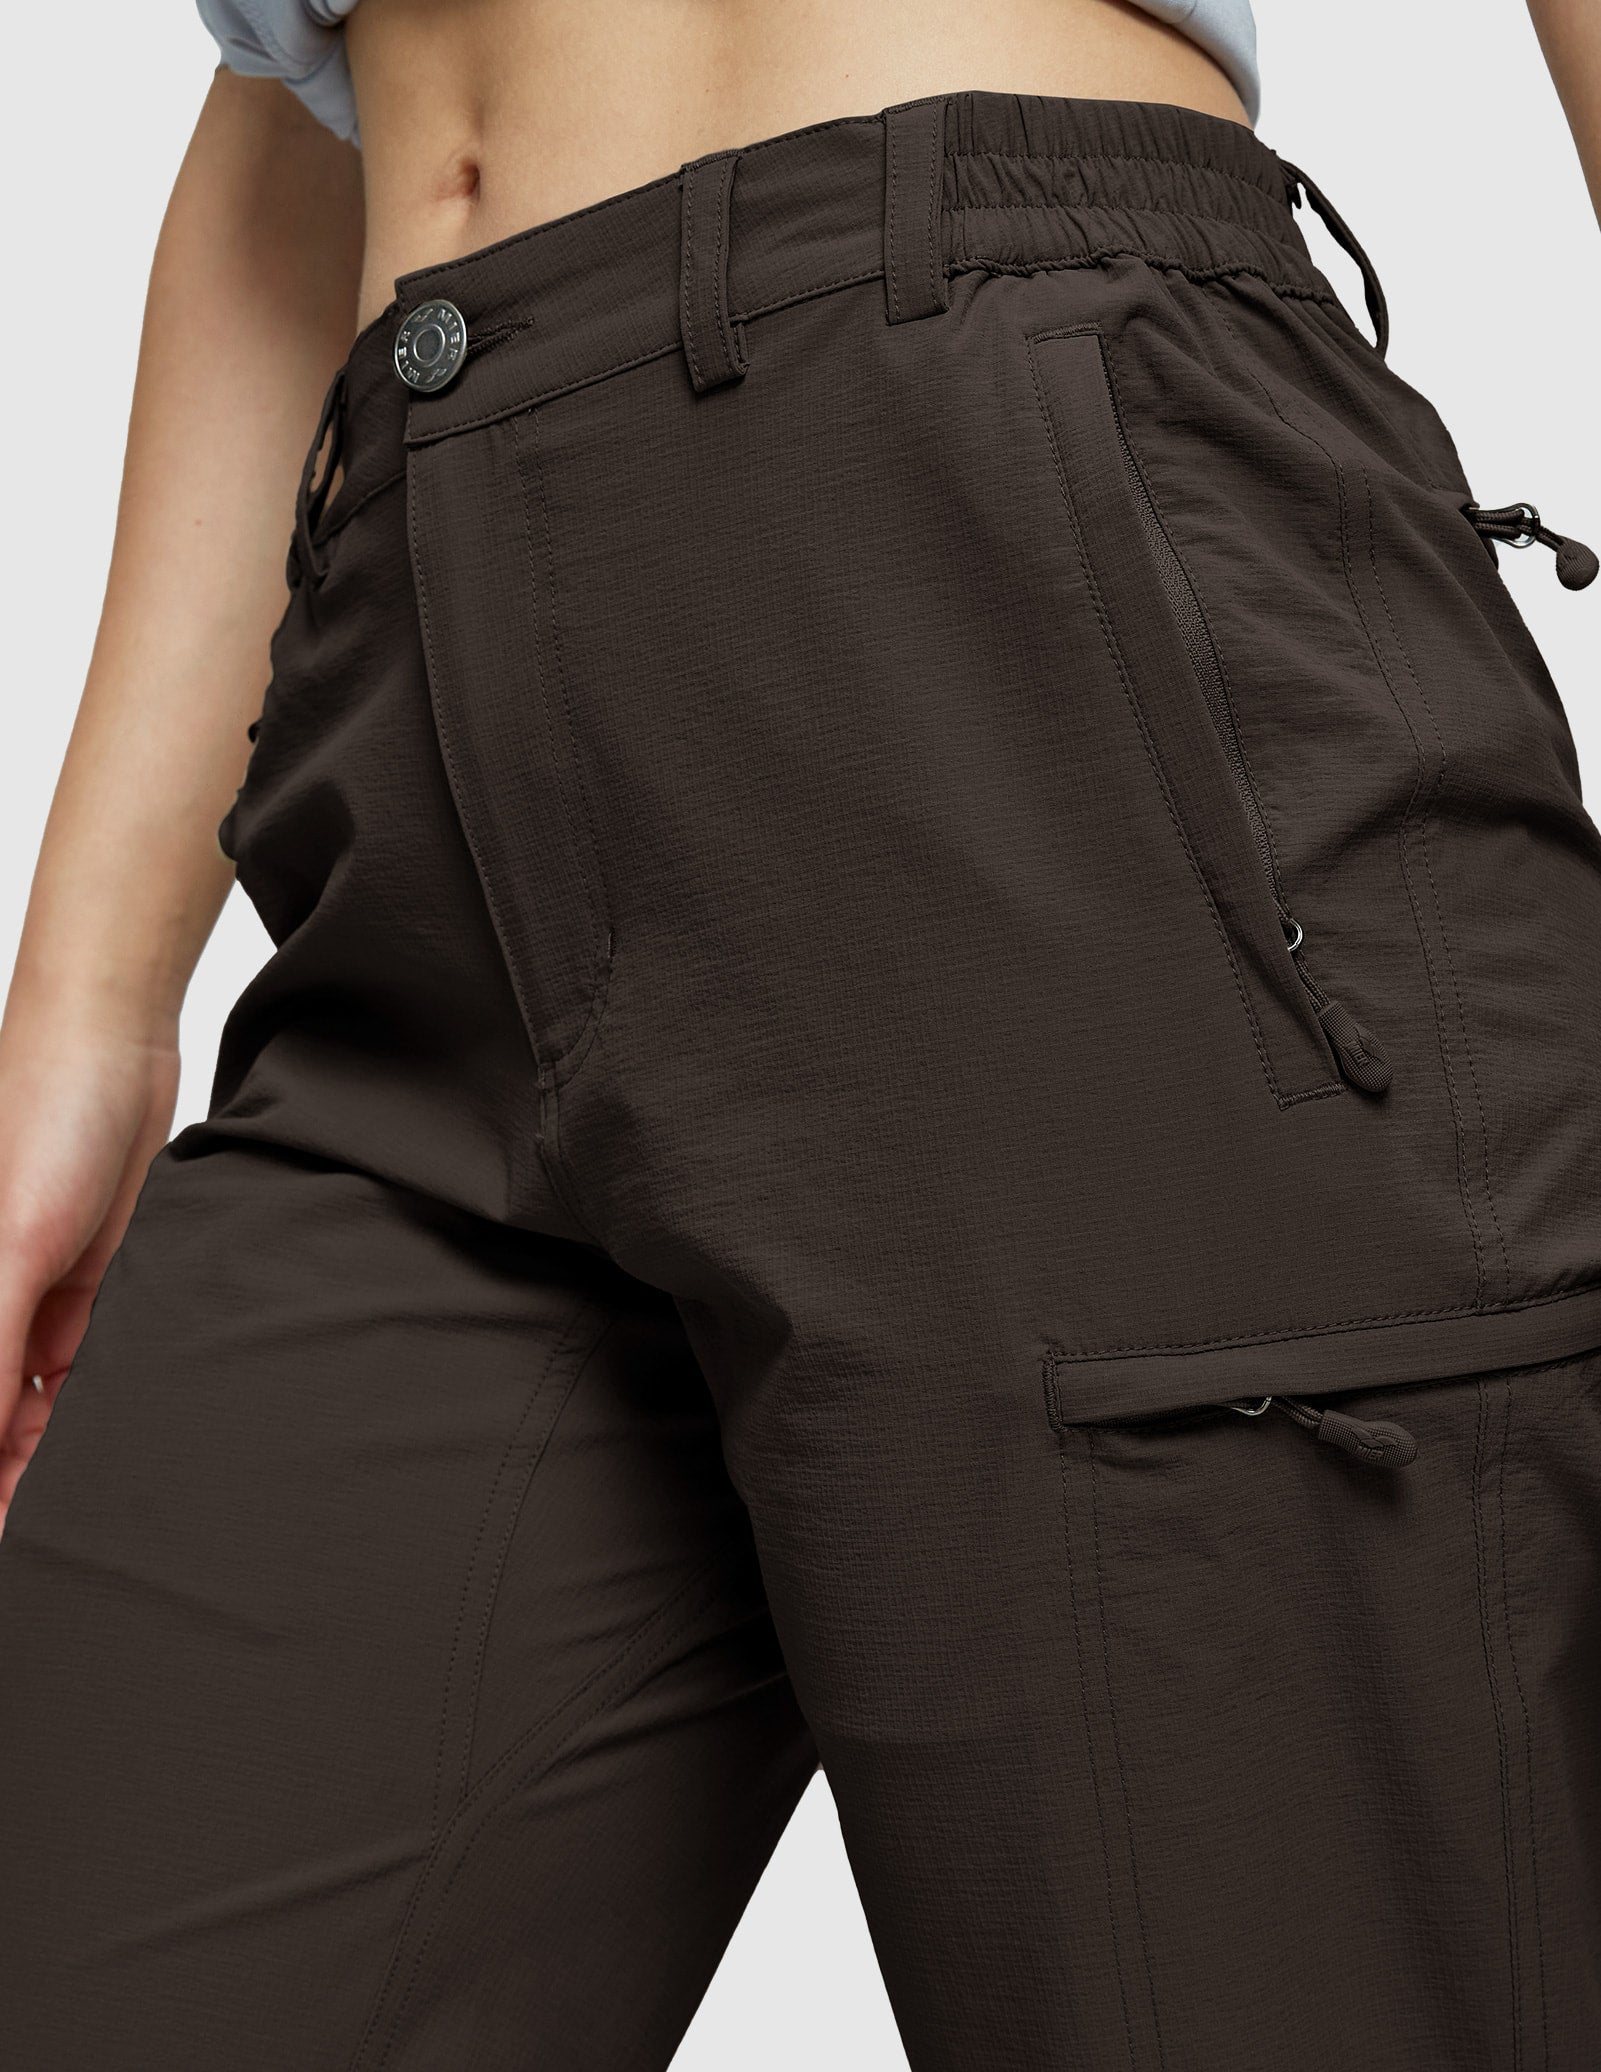 Women's Quick Dry Cargo Pants Lightweight Hiking Pants